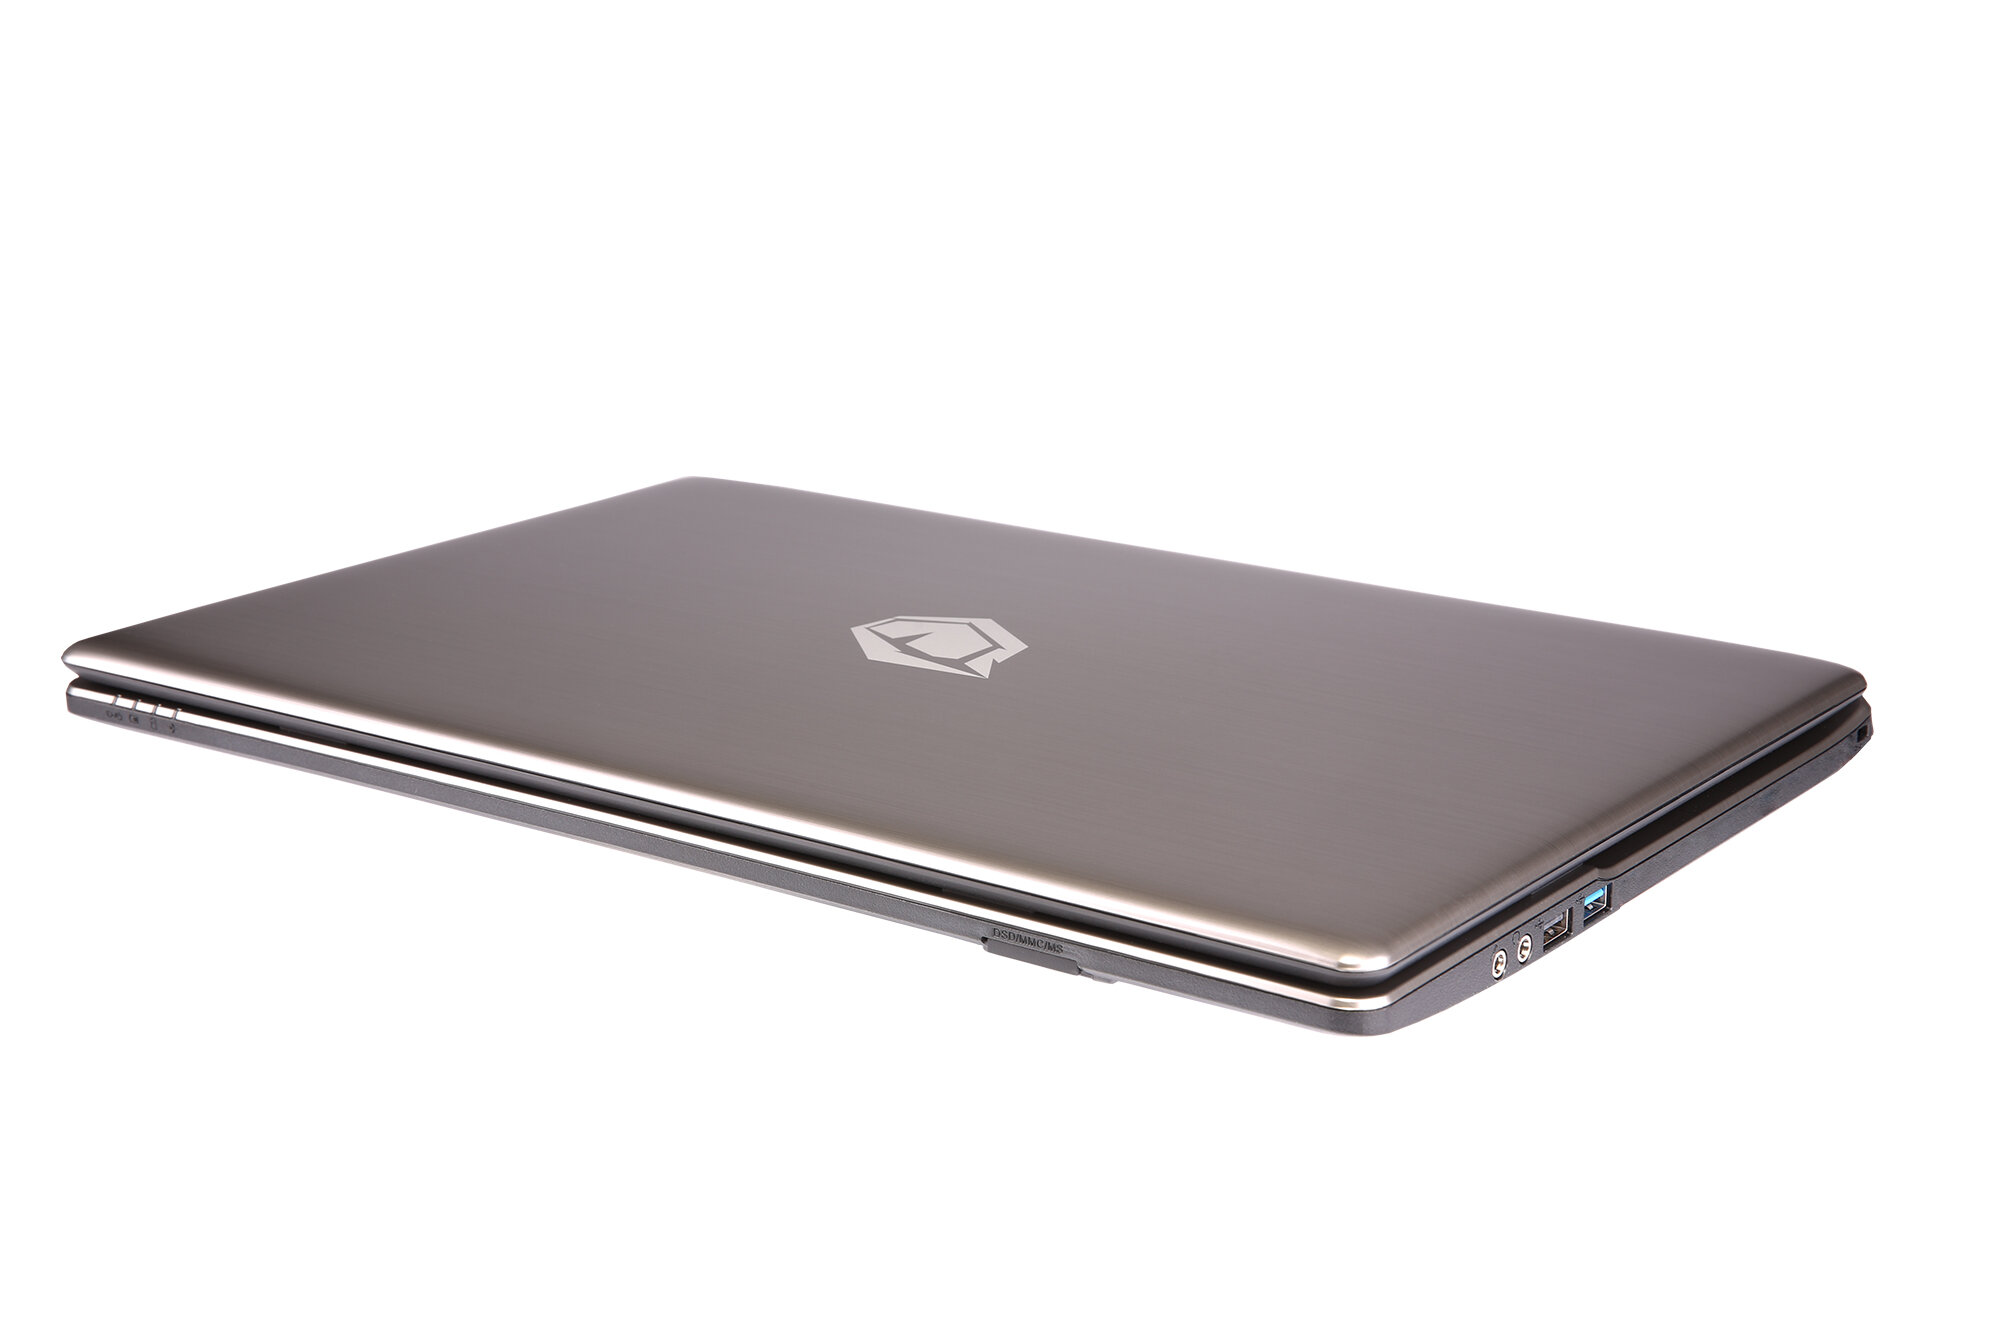 Abra A7 V5.3 17.3" Gaming Laptop 14560